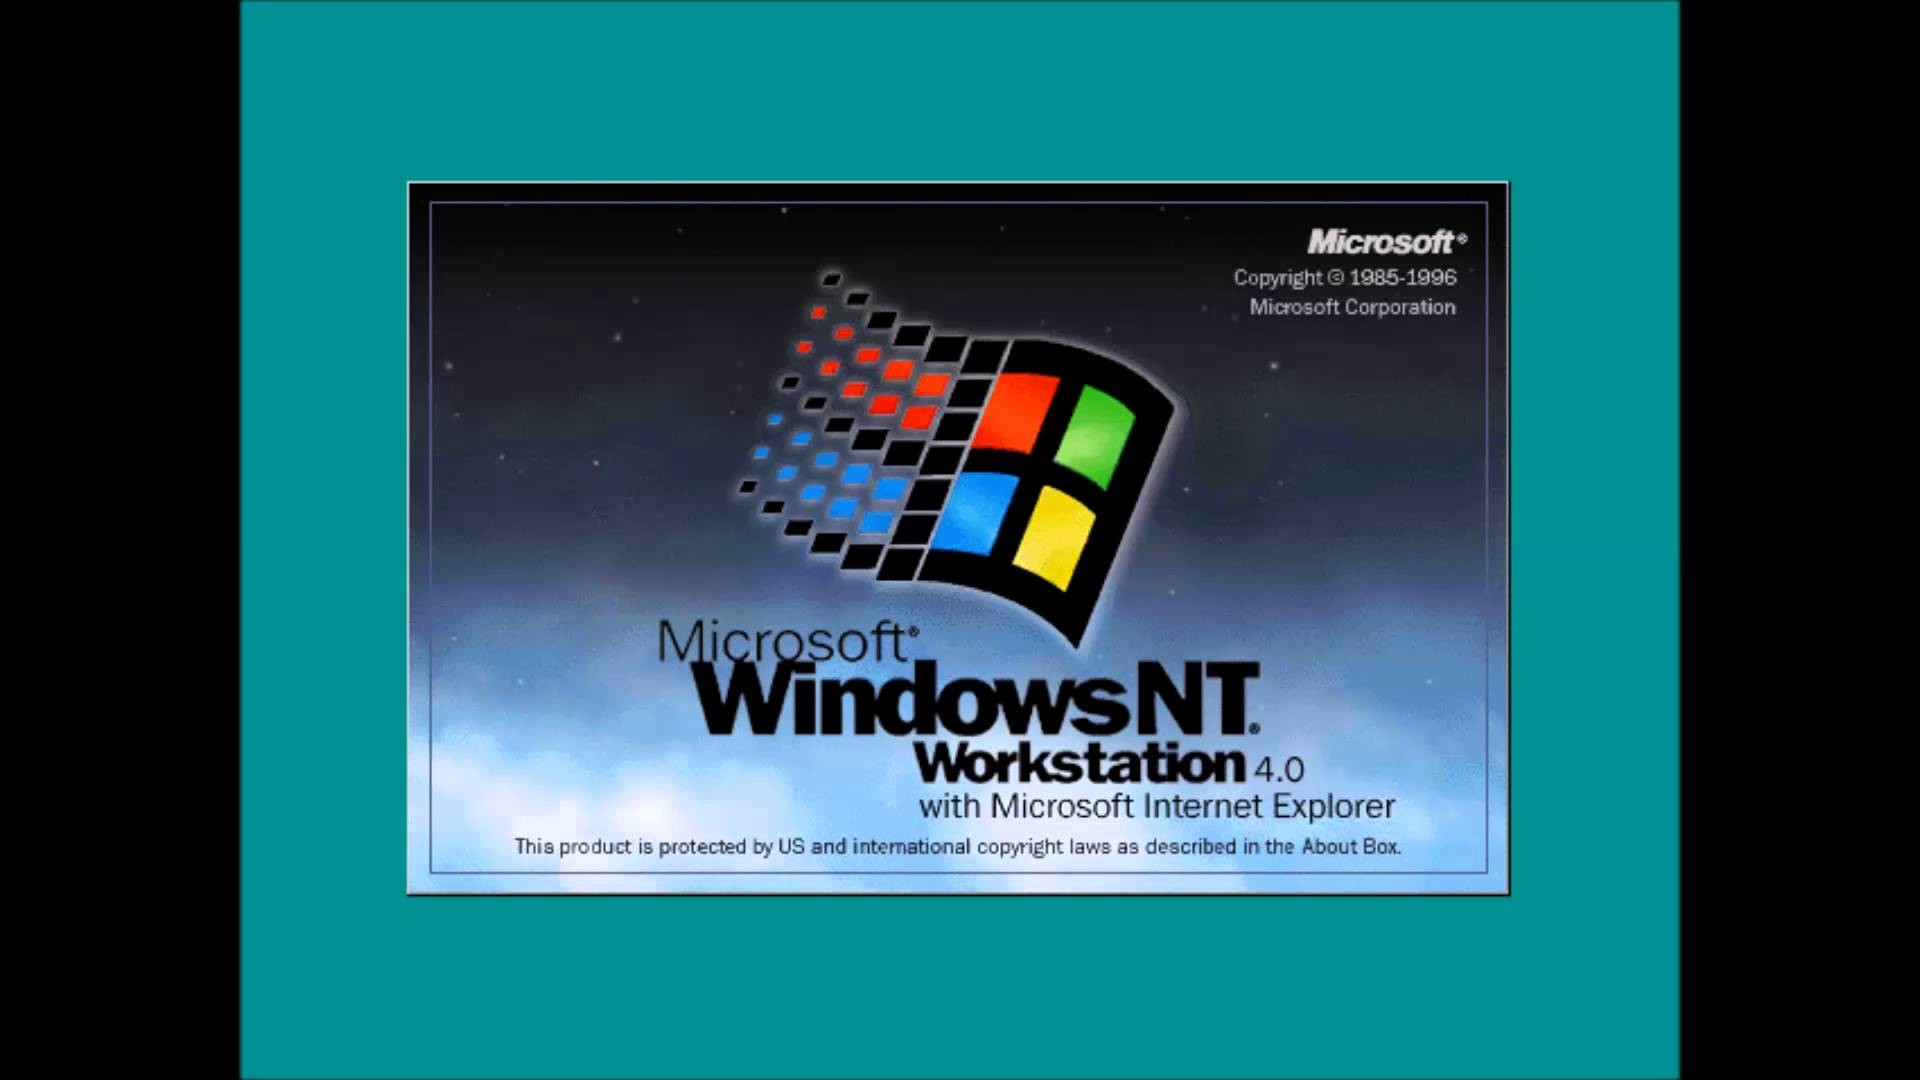 1920x1080 Free download Windows Nt 40 Wallpaper 73 images [] for your Desktop, Mobile \u0026 Tablet | Explore 49+ NT Wallpaper | Windows NT Wallpapers, Windows NT Wallpaper, Windows NT Wallpaper